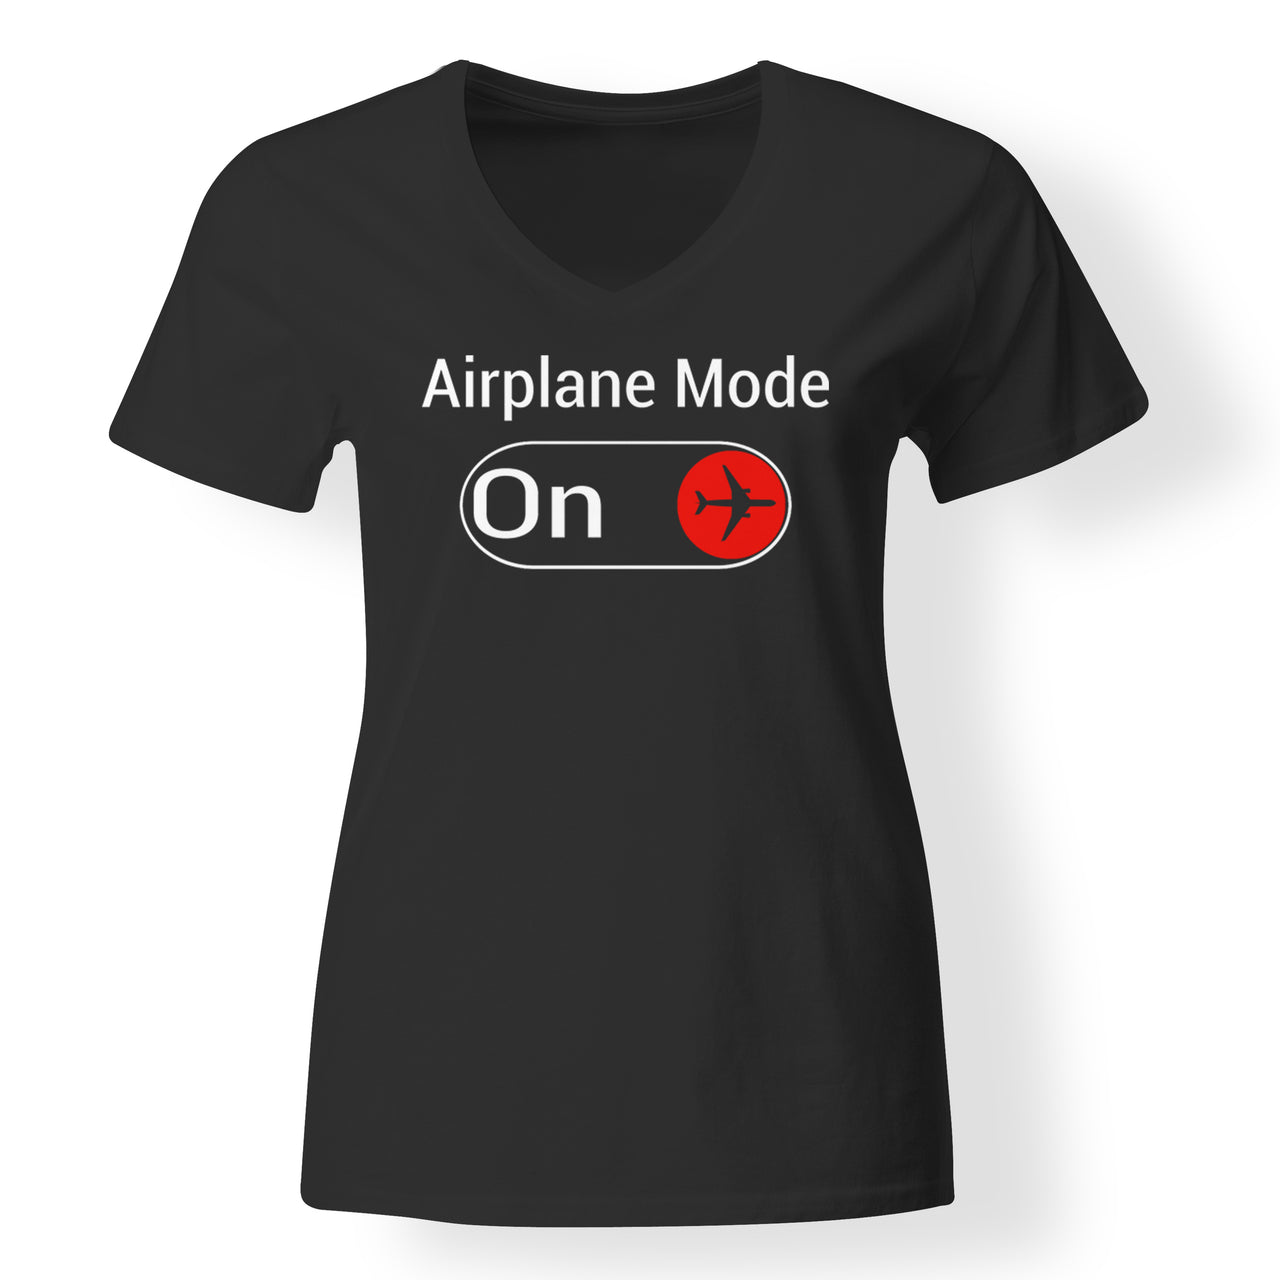 Airplane Mode On Designed V-Neck T-Shirts